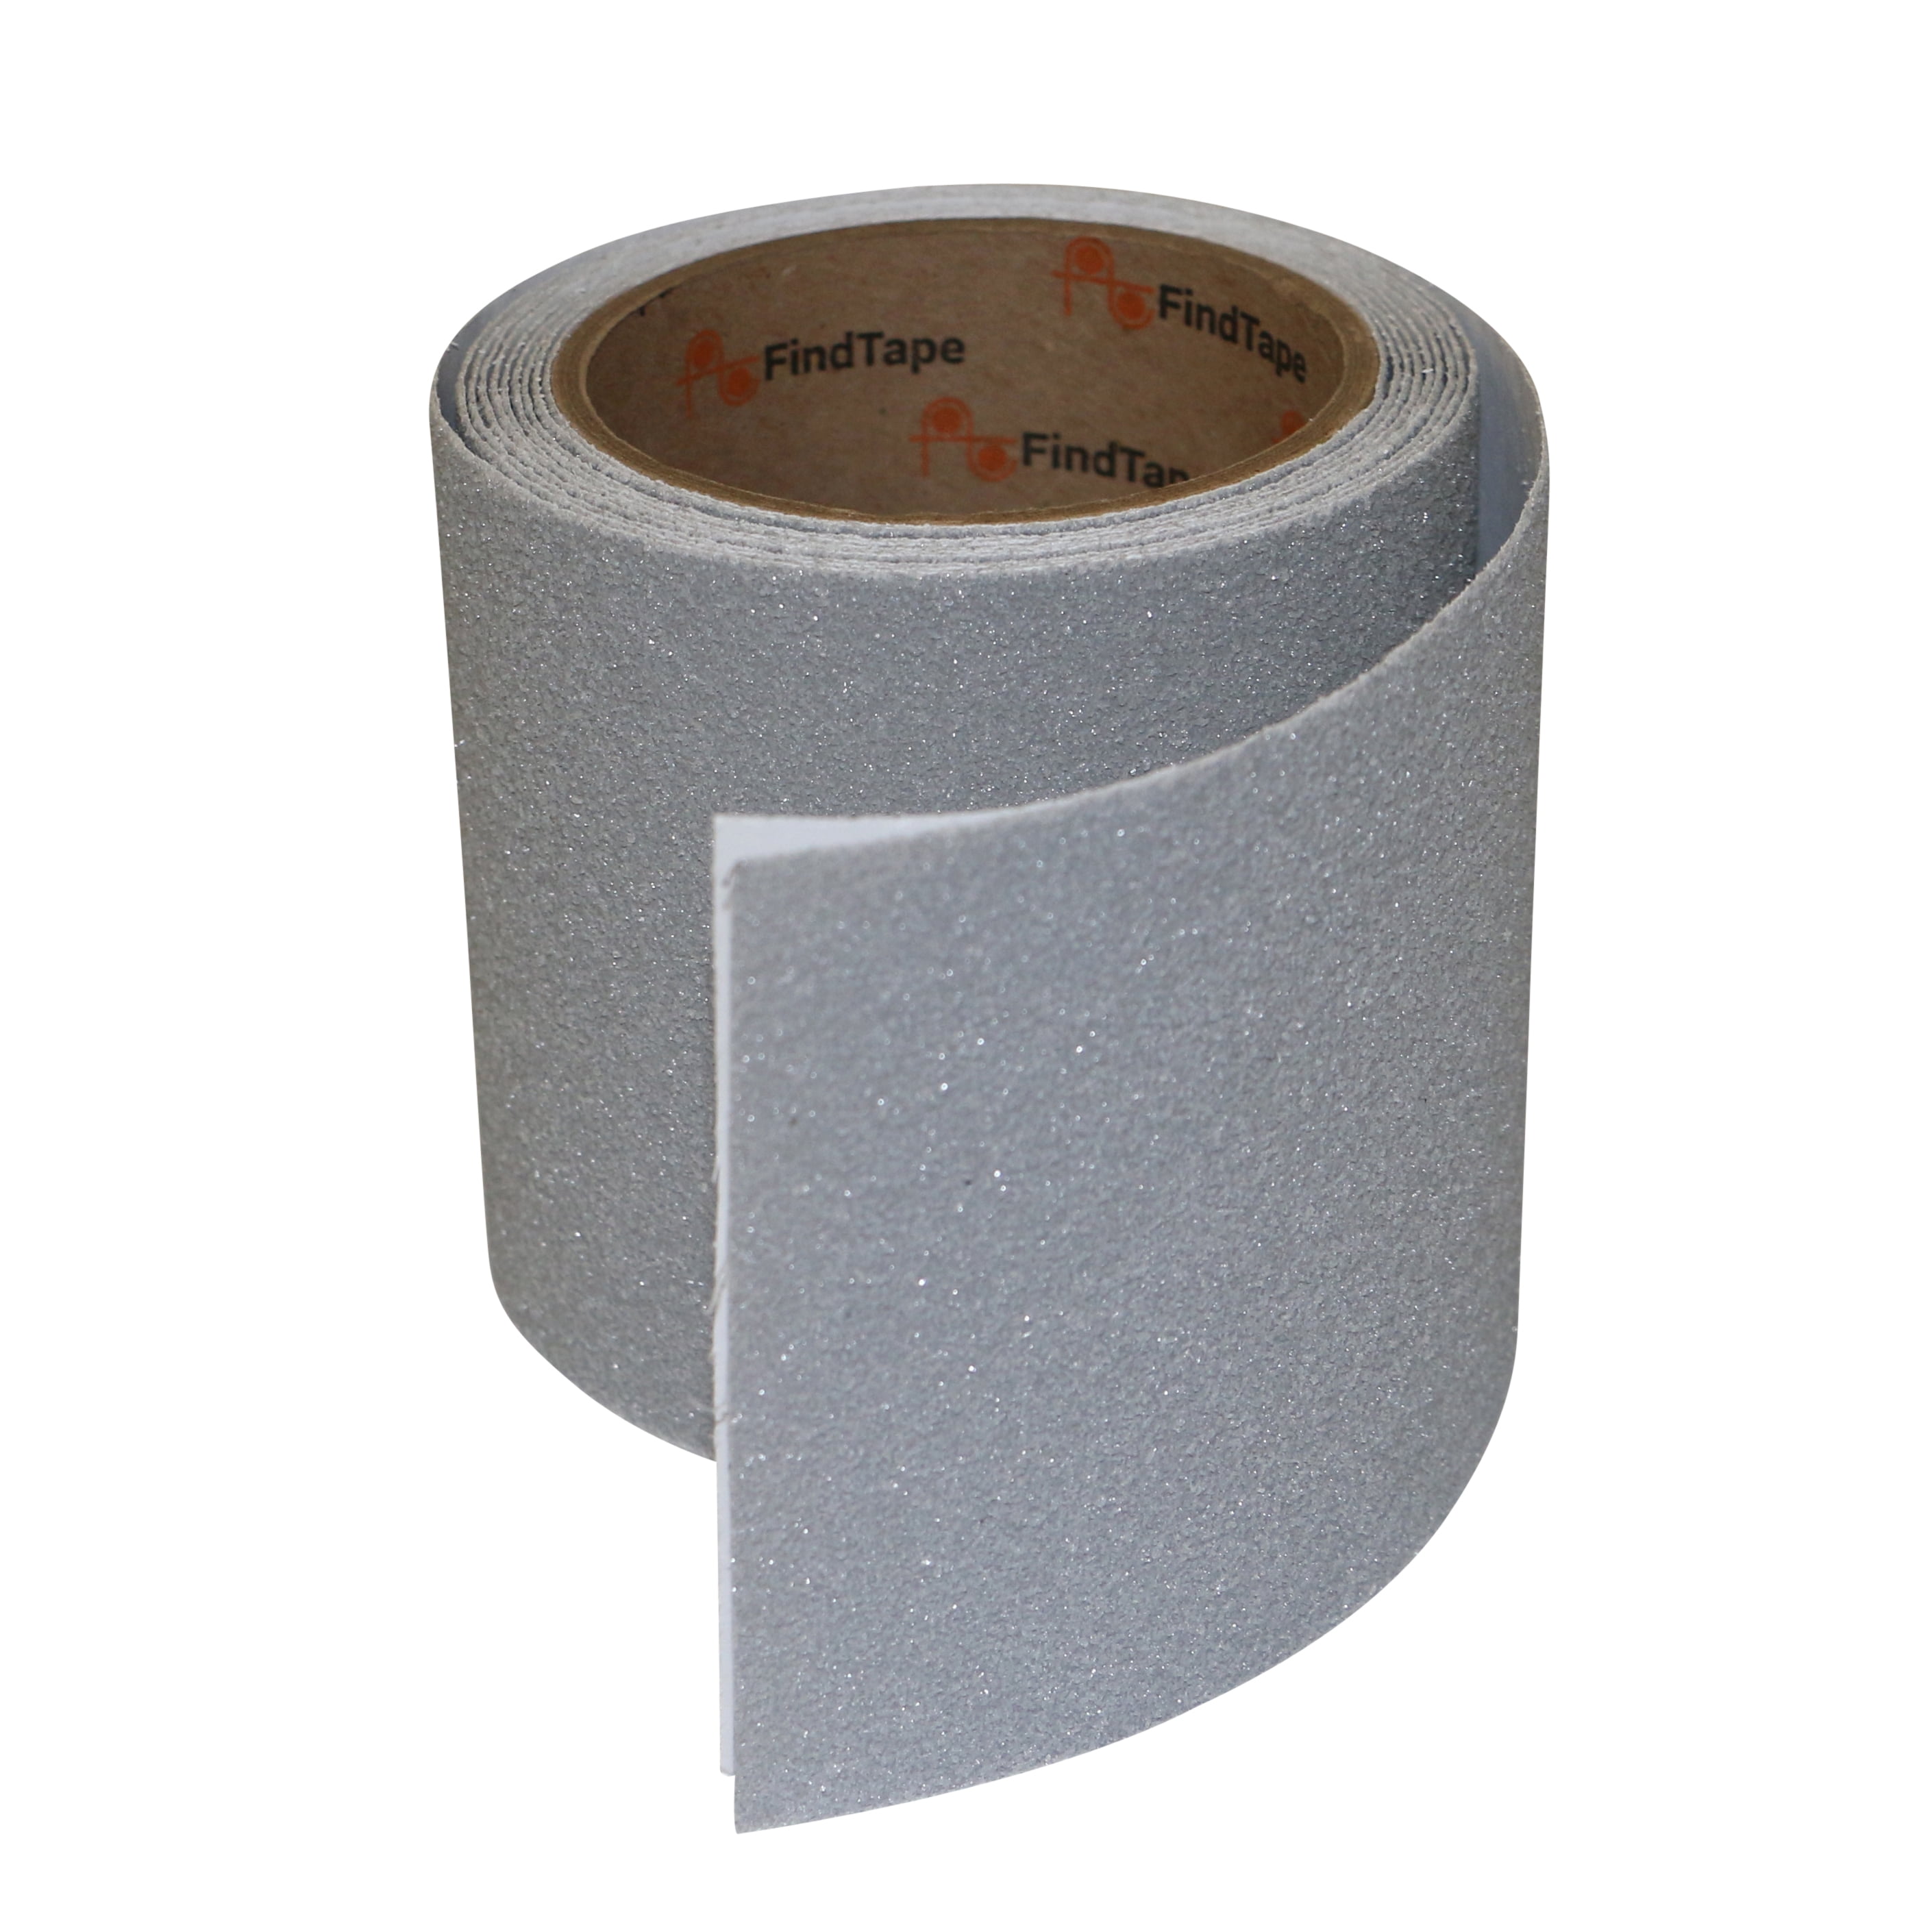 FindTape AST-35 Premium Anti-Slip Non-Skid Tape: 4 in. x 10 ft. (Grey)